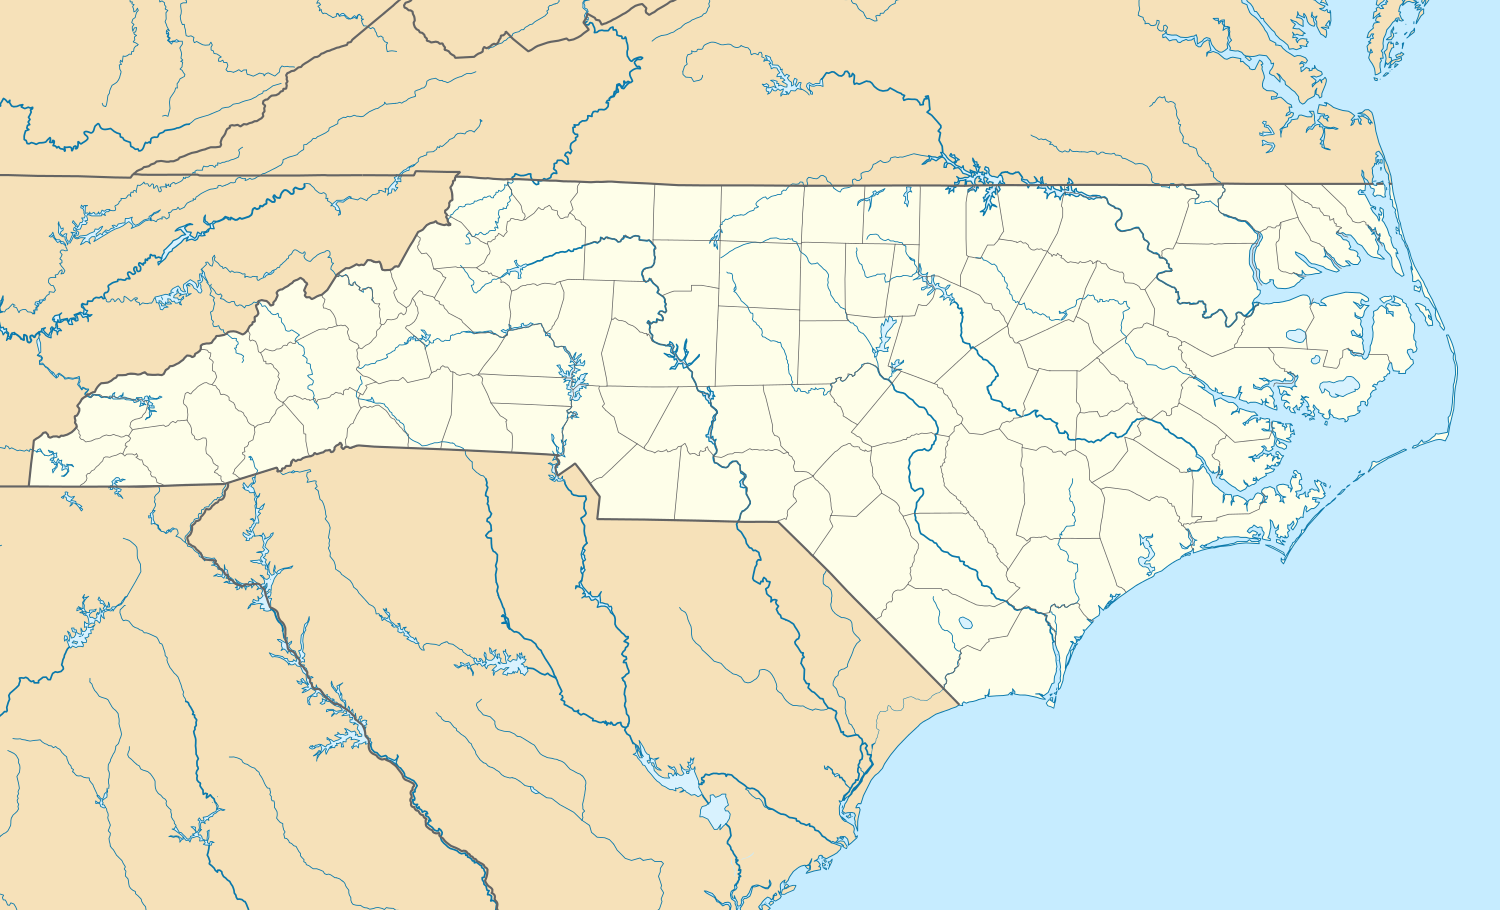 Tar Heel League is located in North Carolina